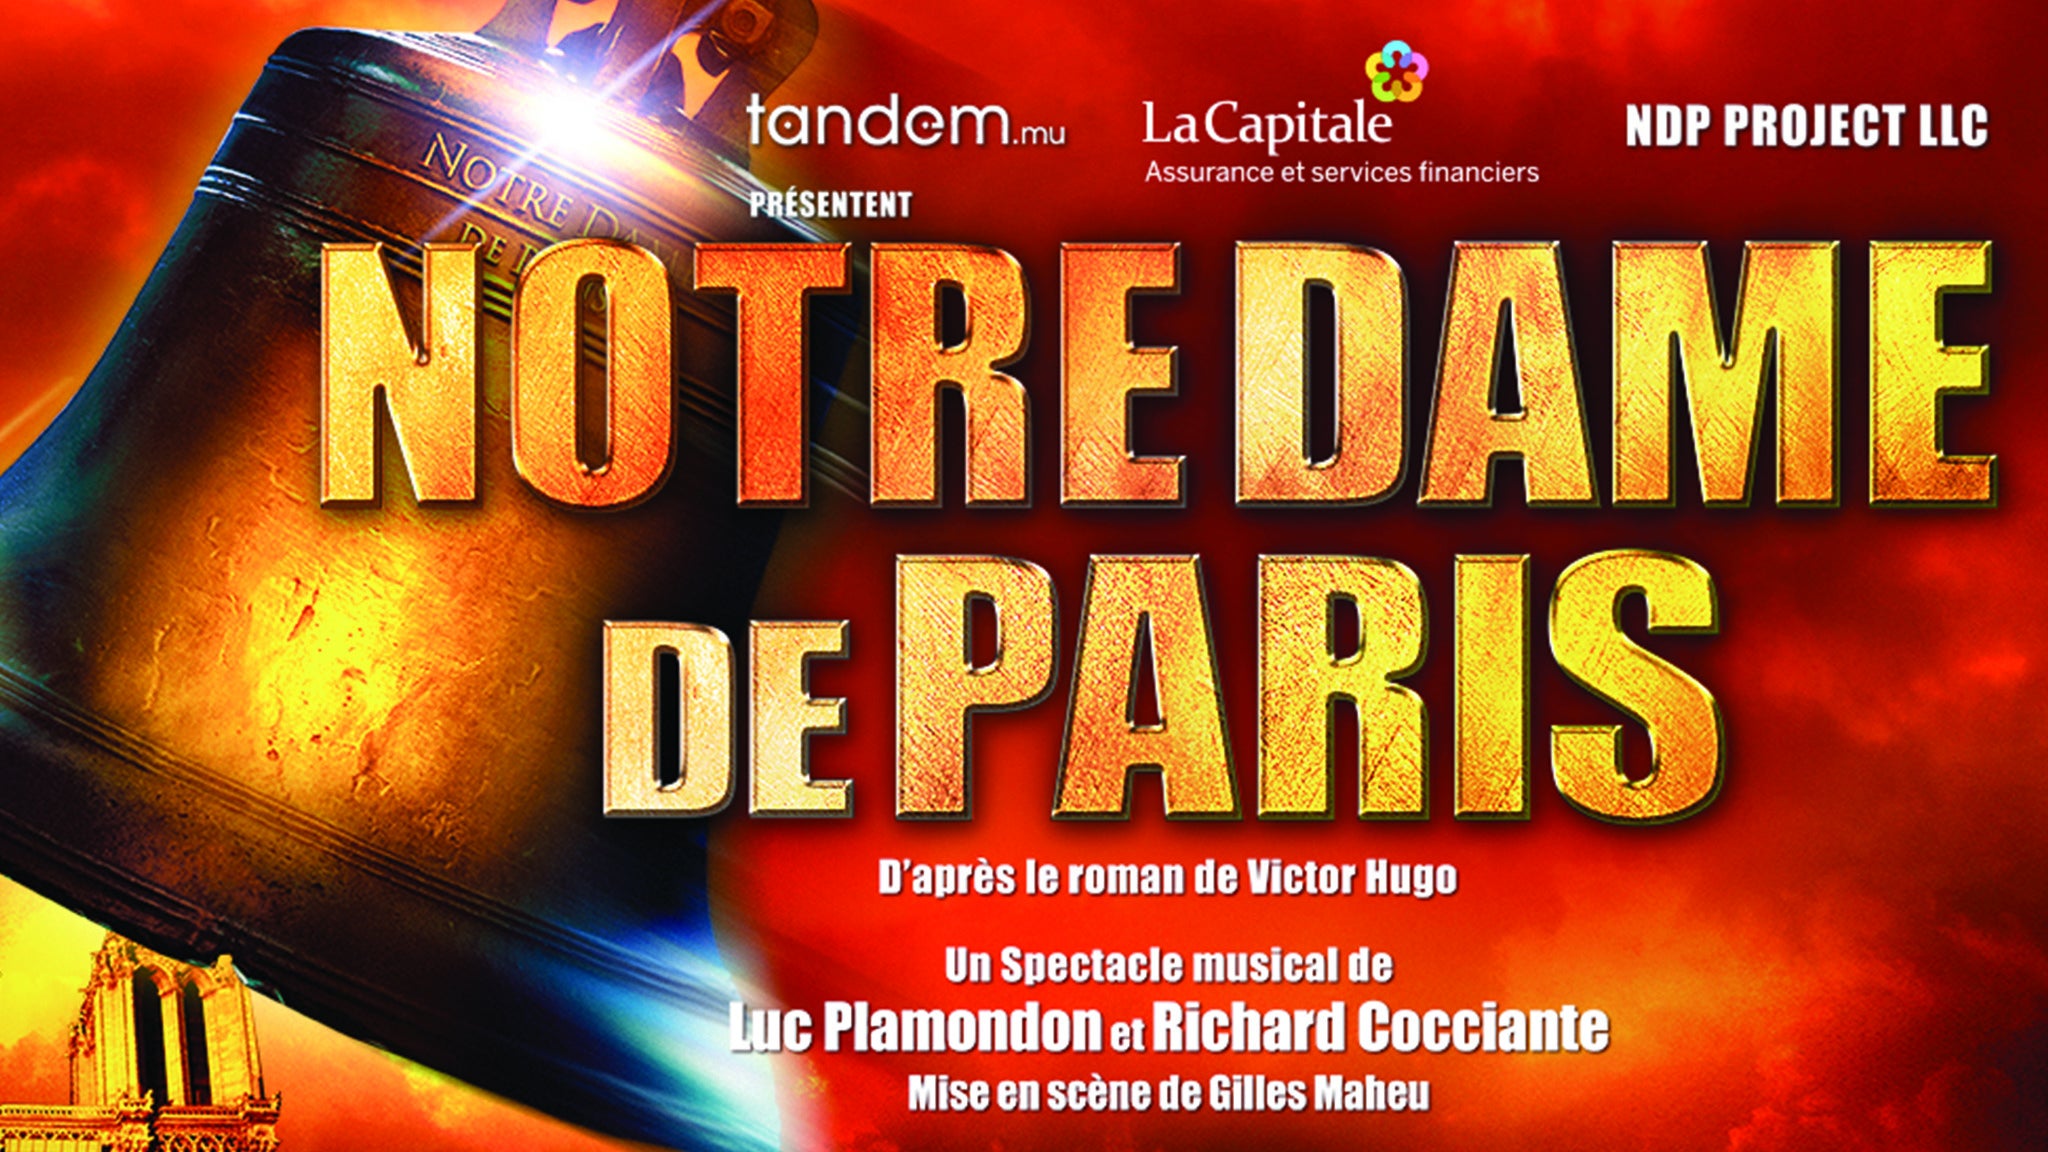 Notre Dame de Paris in Moncton promo photo for Boxing Day  presale offer code